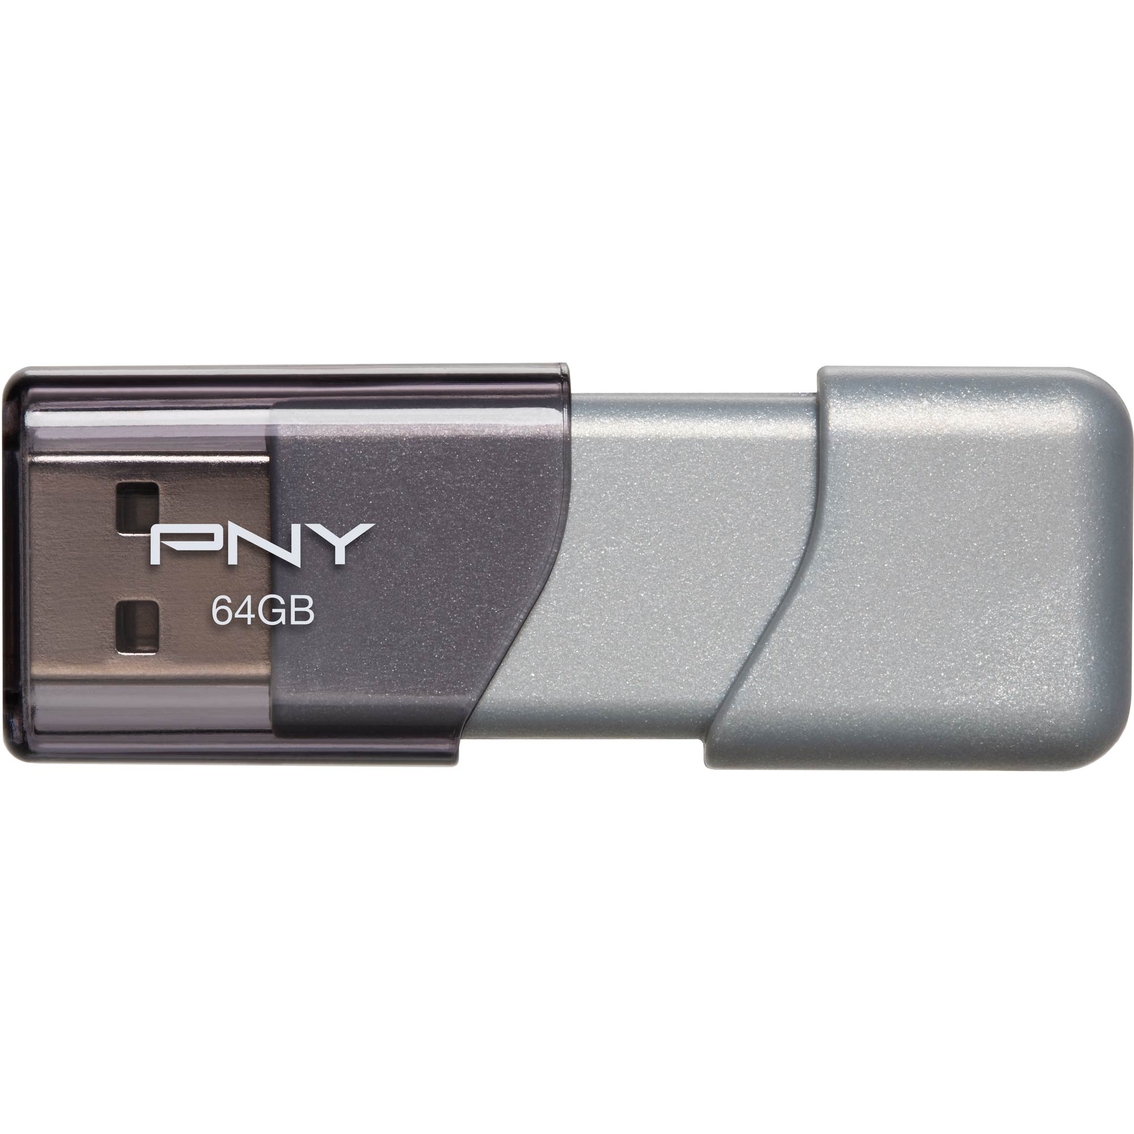 PNY Turbo 64GB USB 3.0 Flash Drive - Image 2 of 2